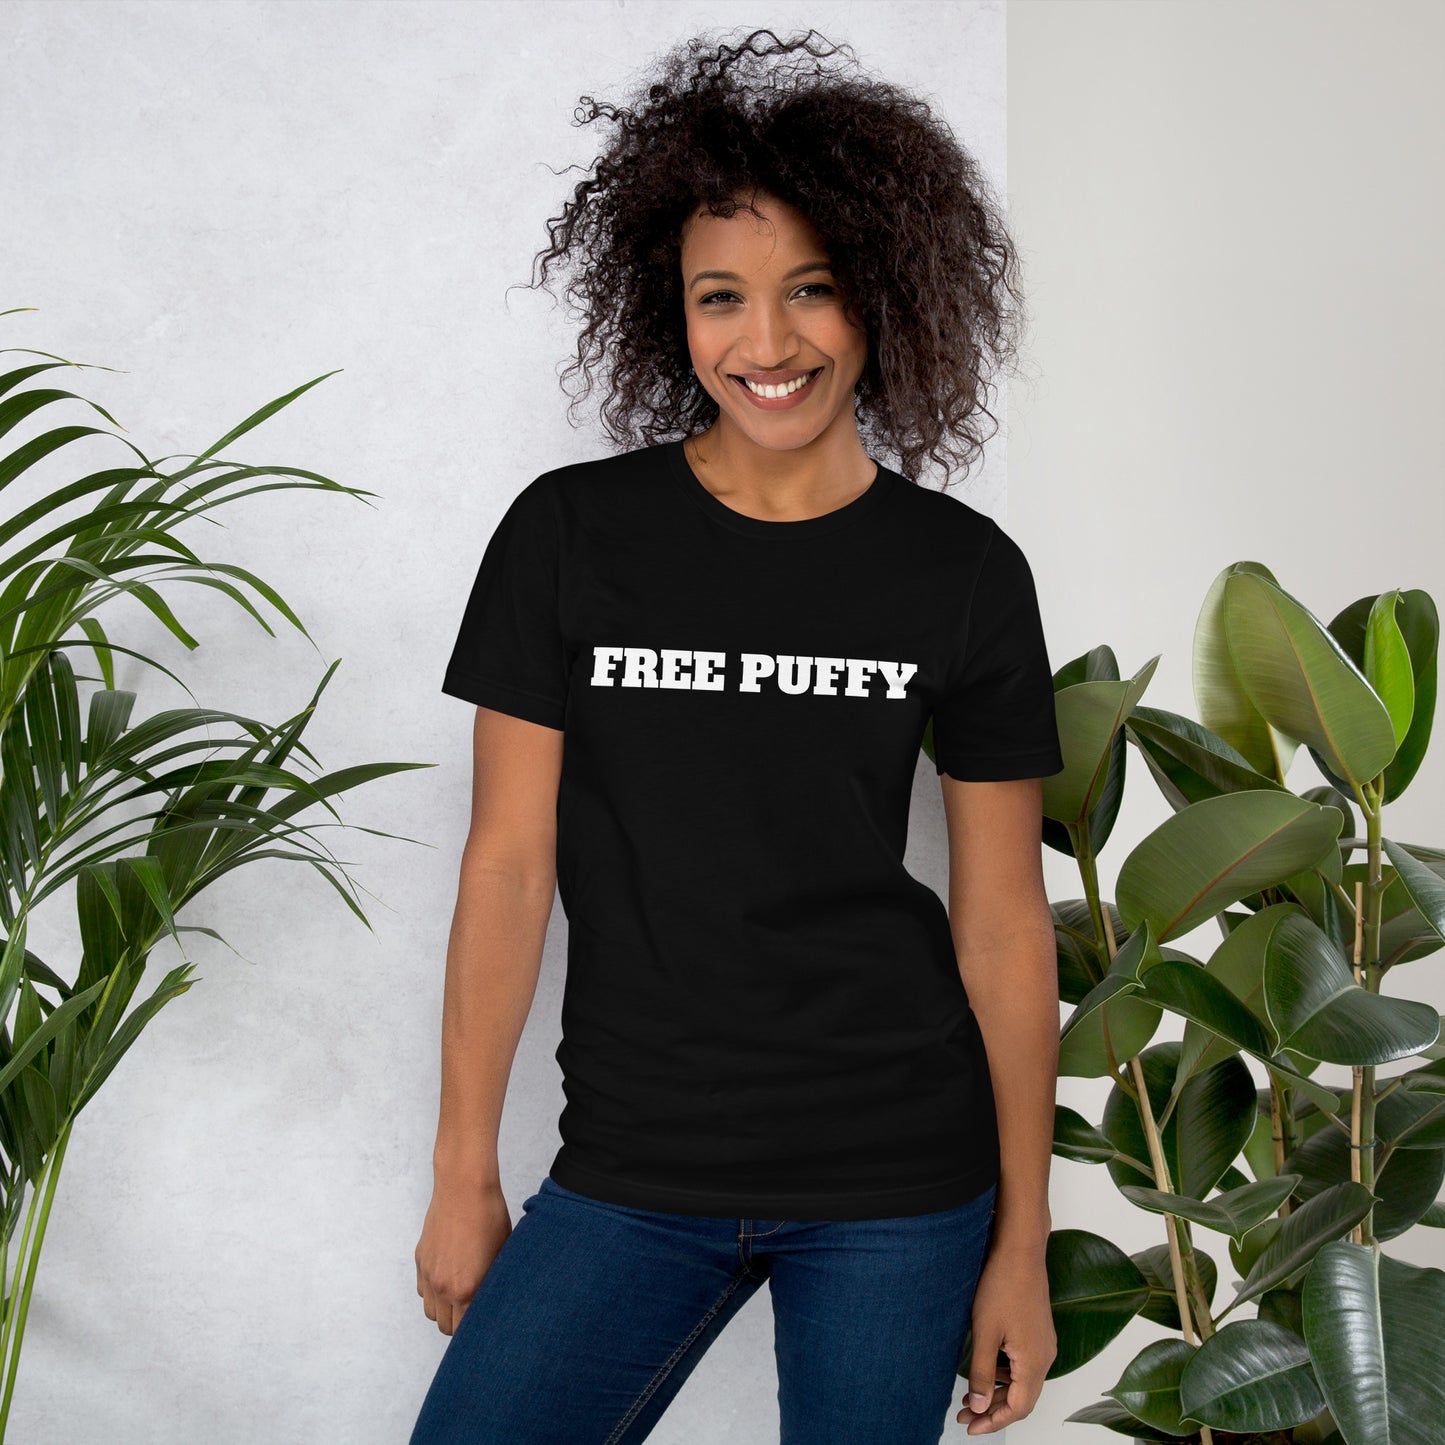 FREE PUFFY Unisex t-shirt